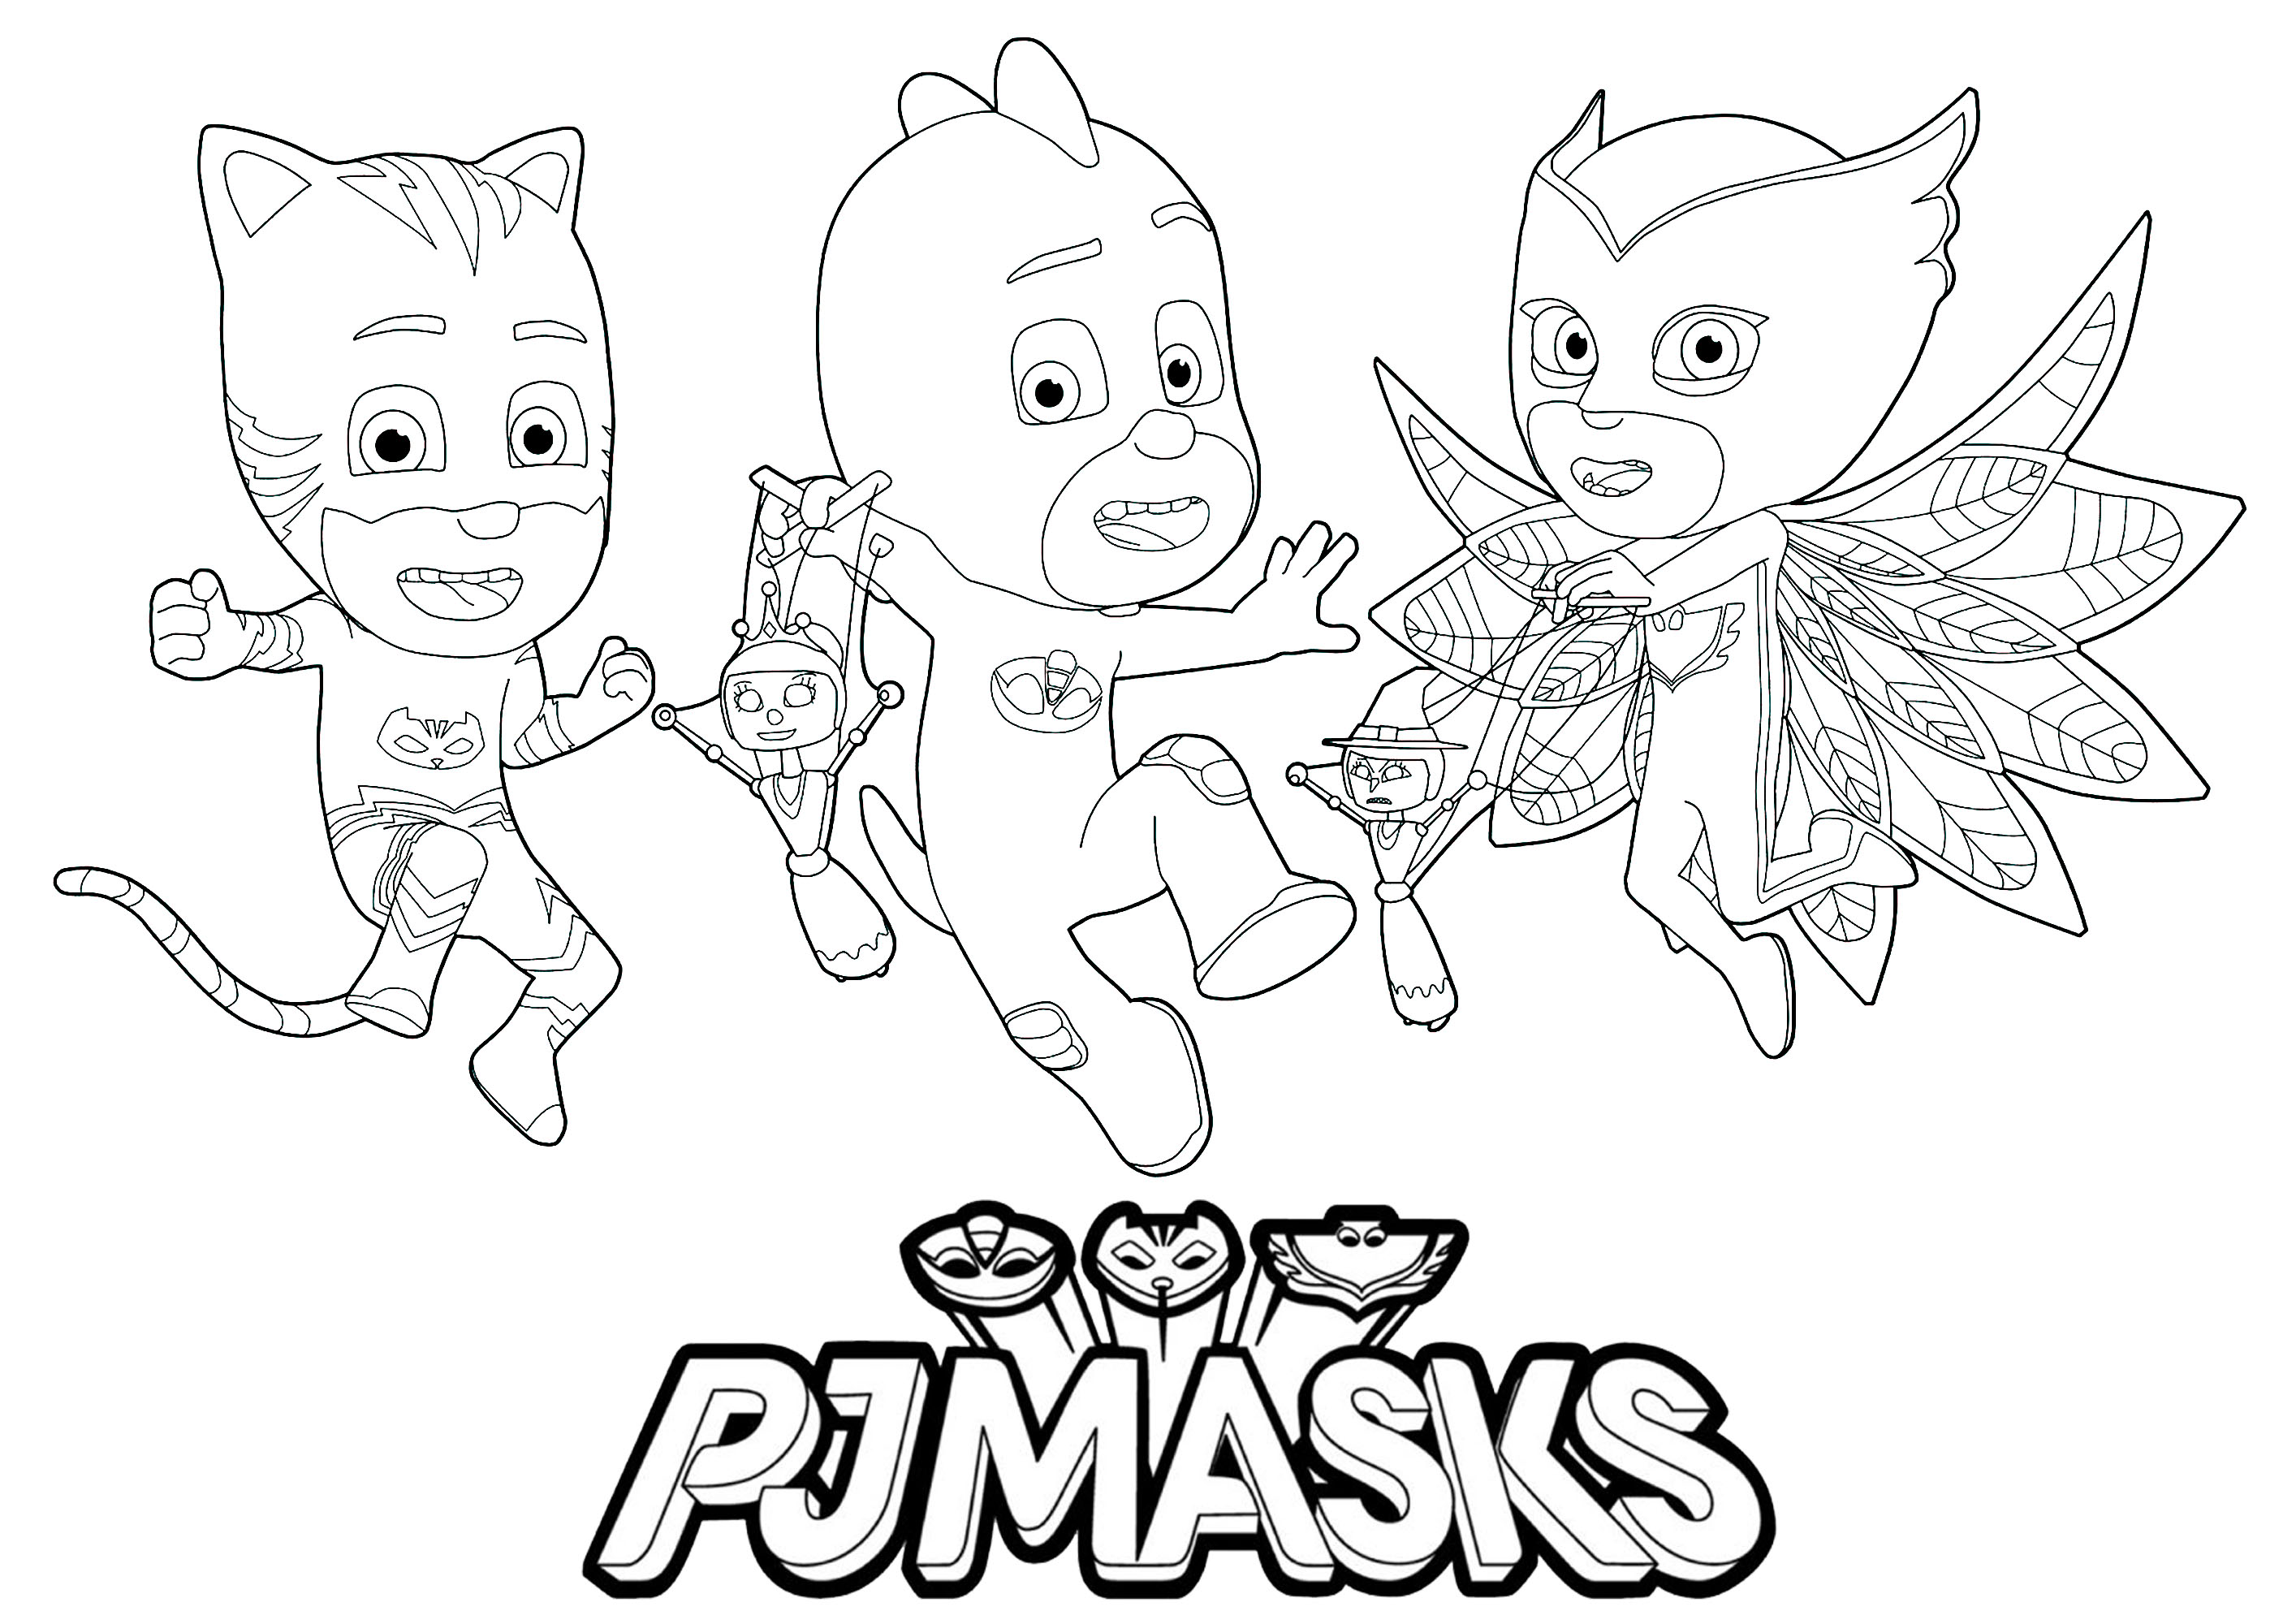 Pj masks to print for free - PJ Masks Kids Coloring Pages